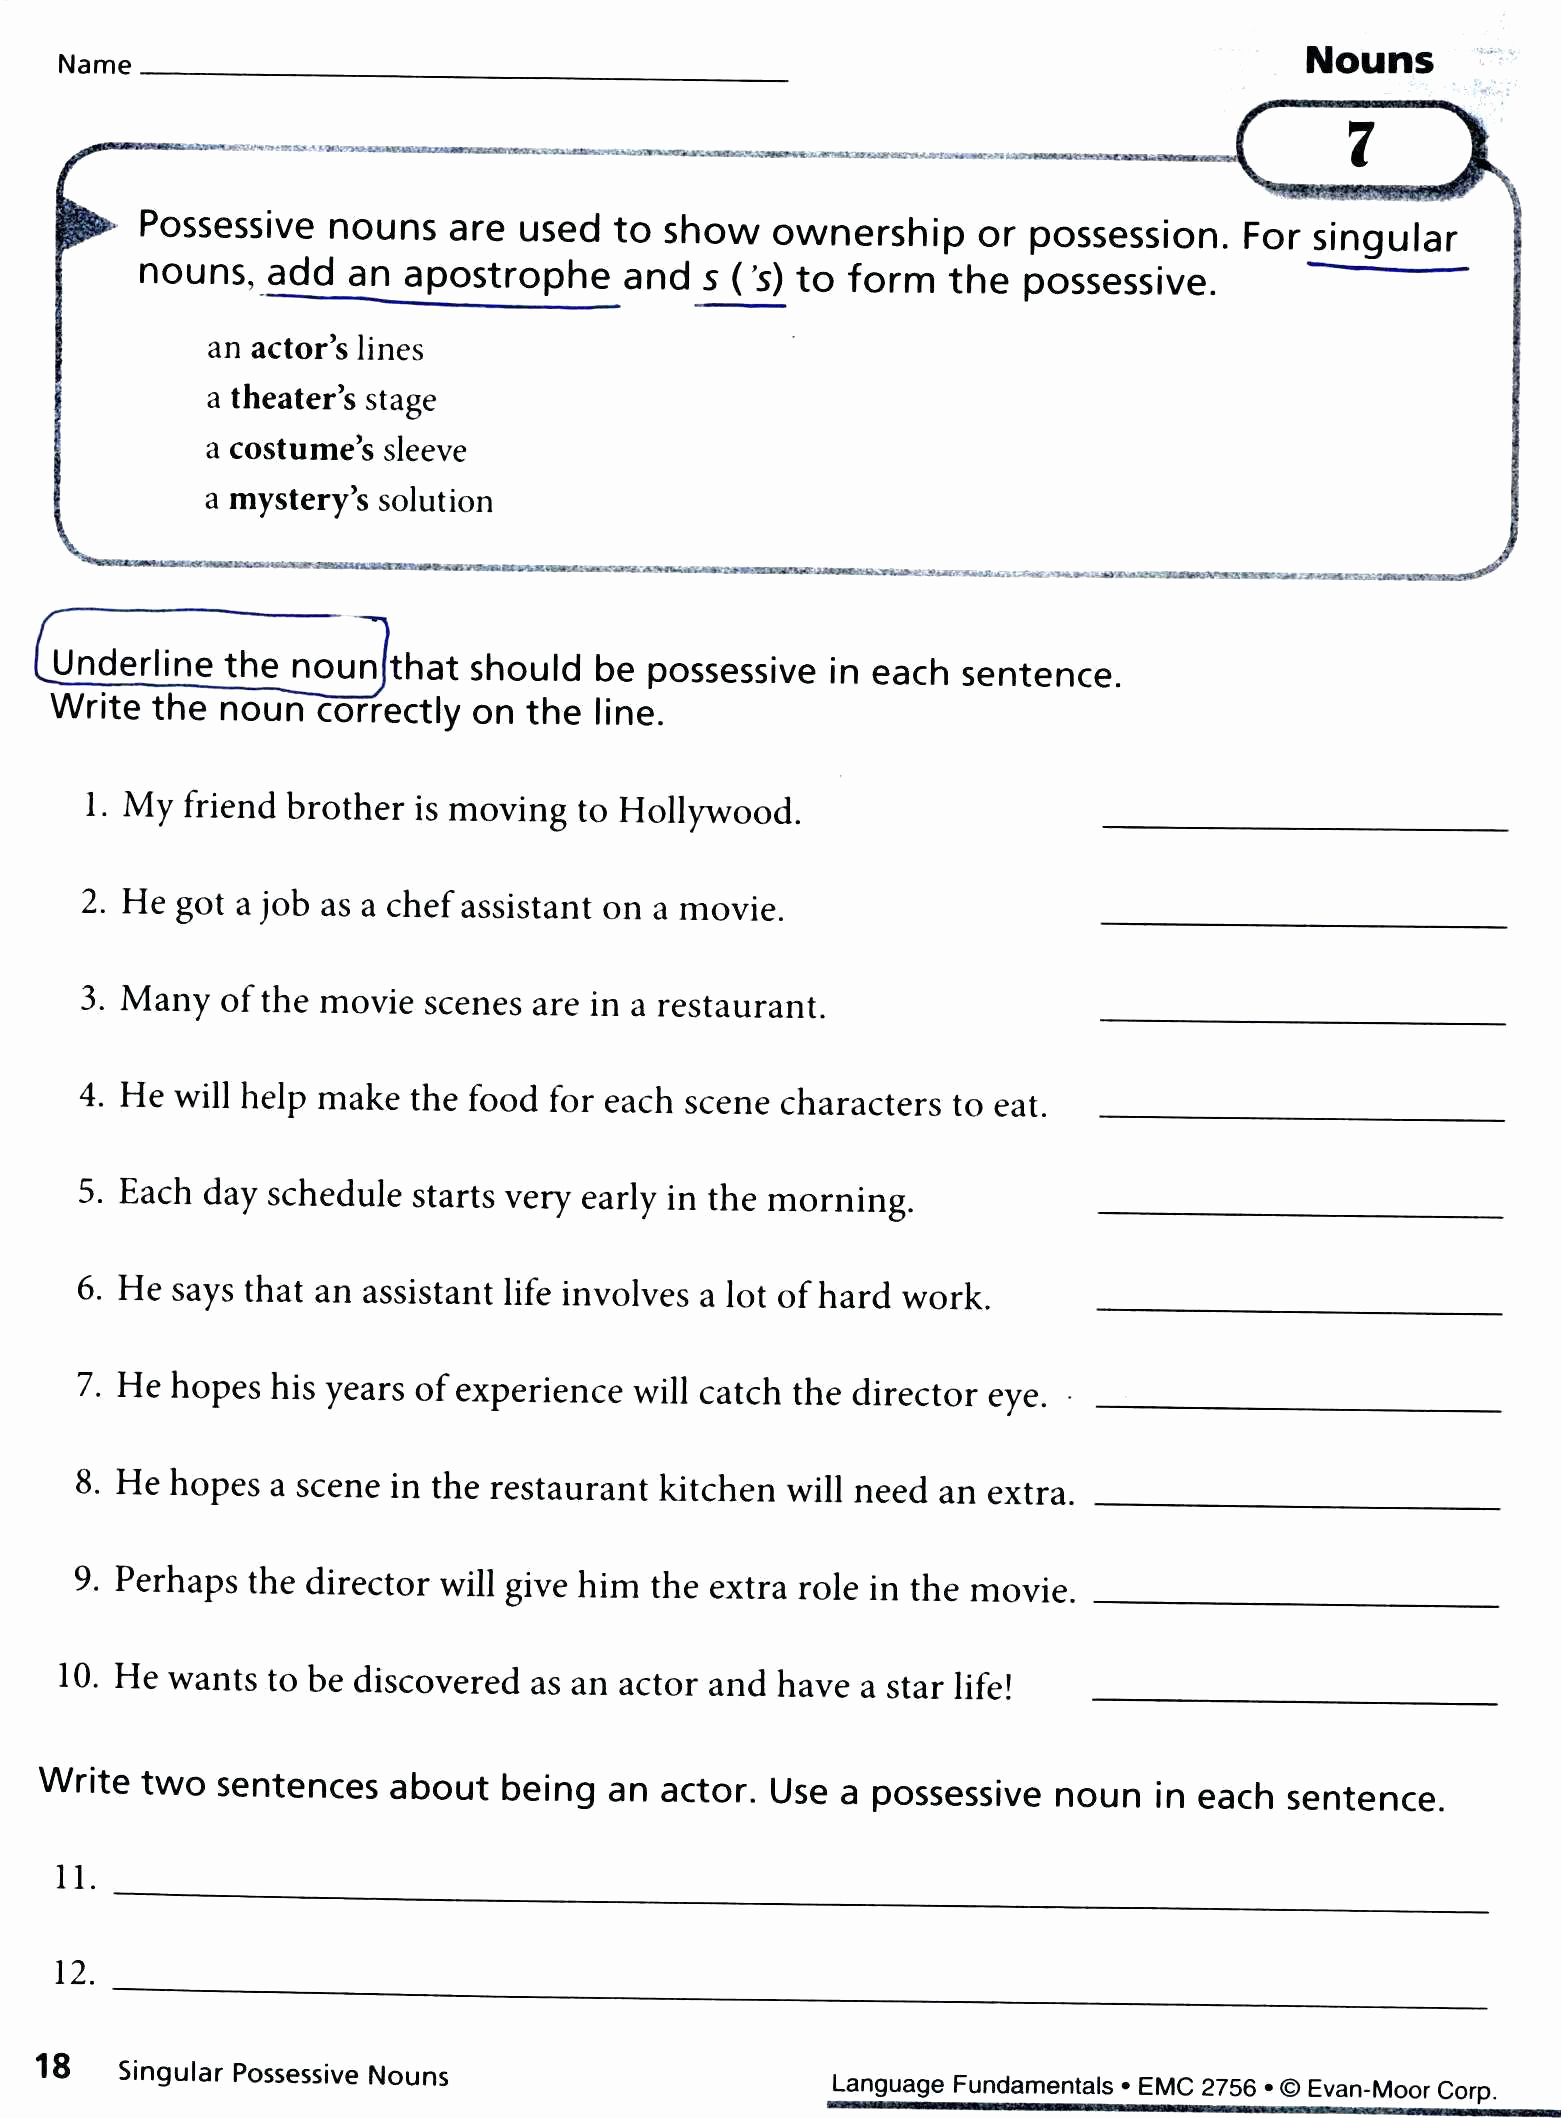 Possessive Pronouns Worksheet 2nd Grade Fresh 20 Possessive Pronouns Worksheet 2nd Grade